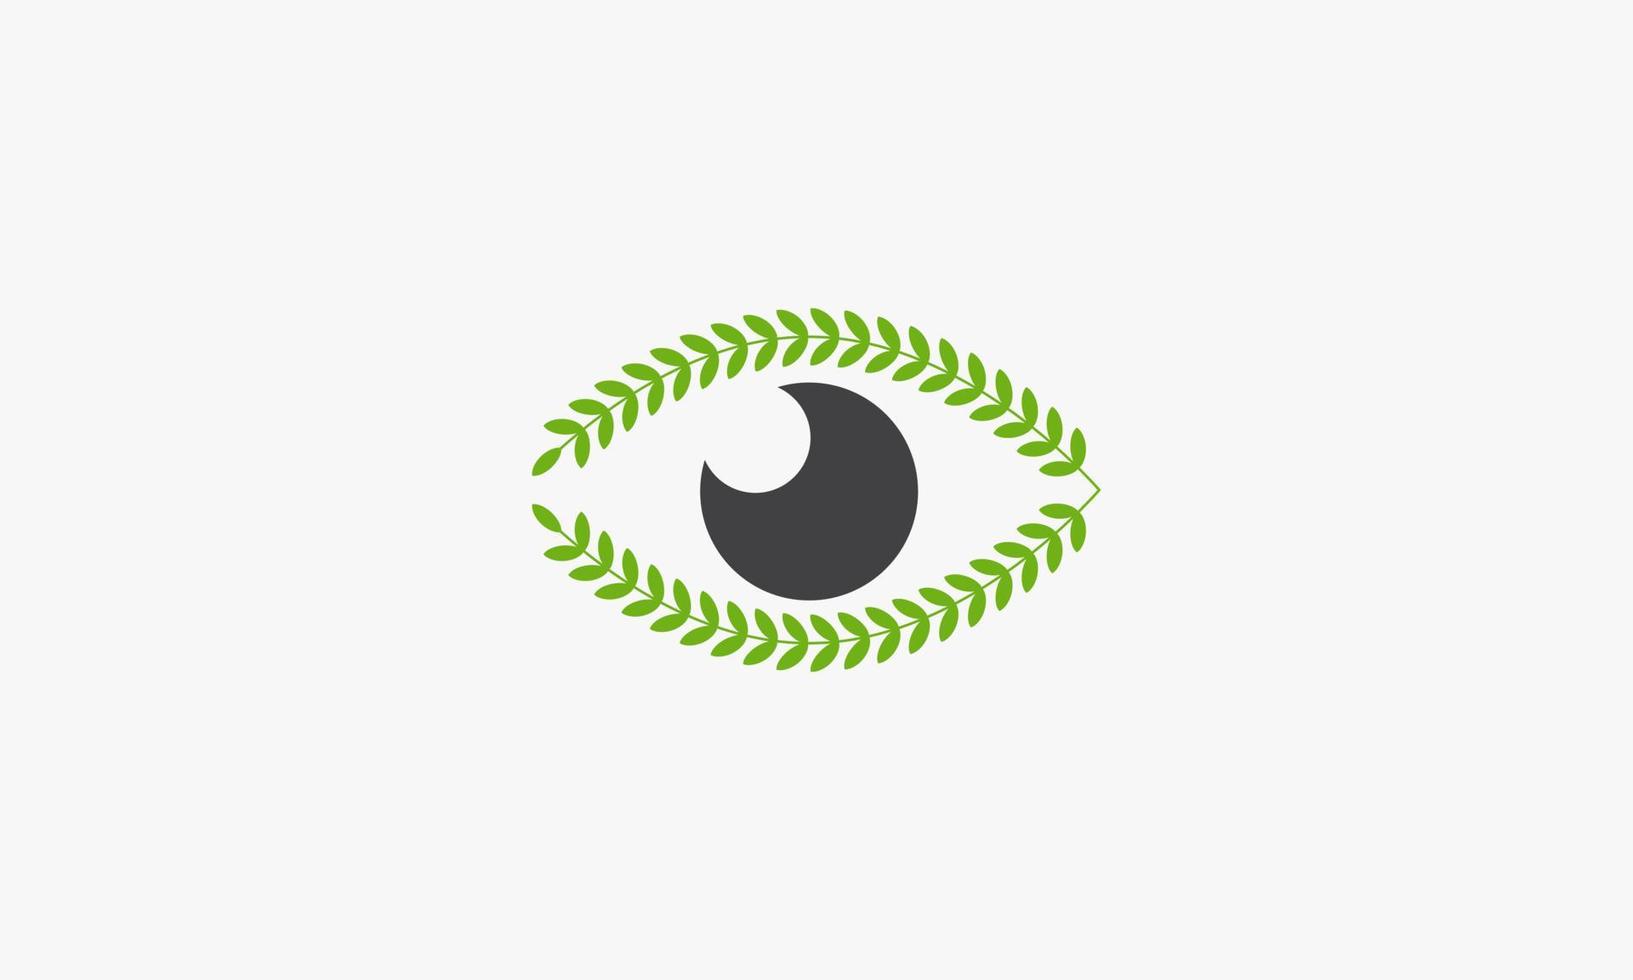 green eye vector illustration on white background. creative icon.